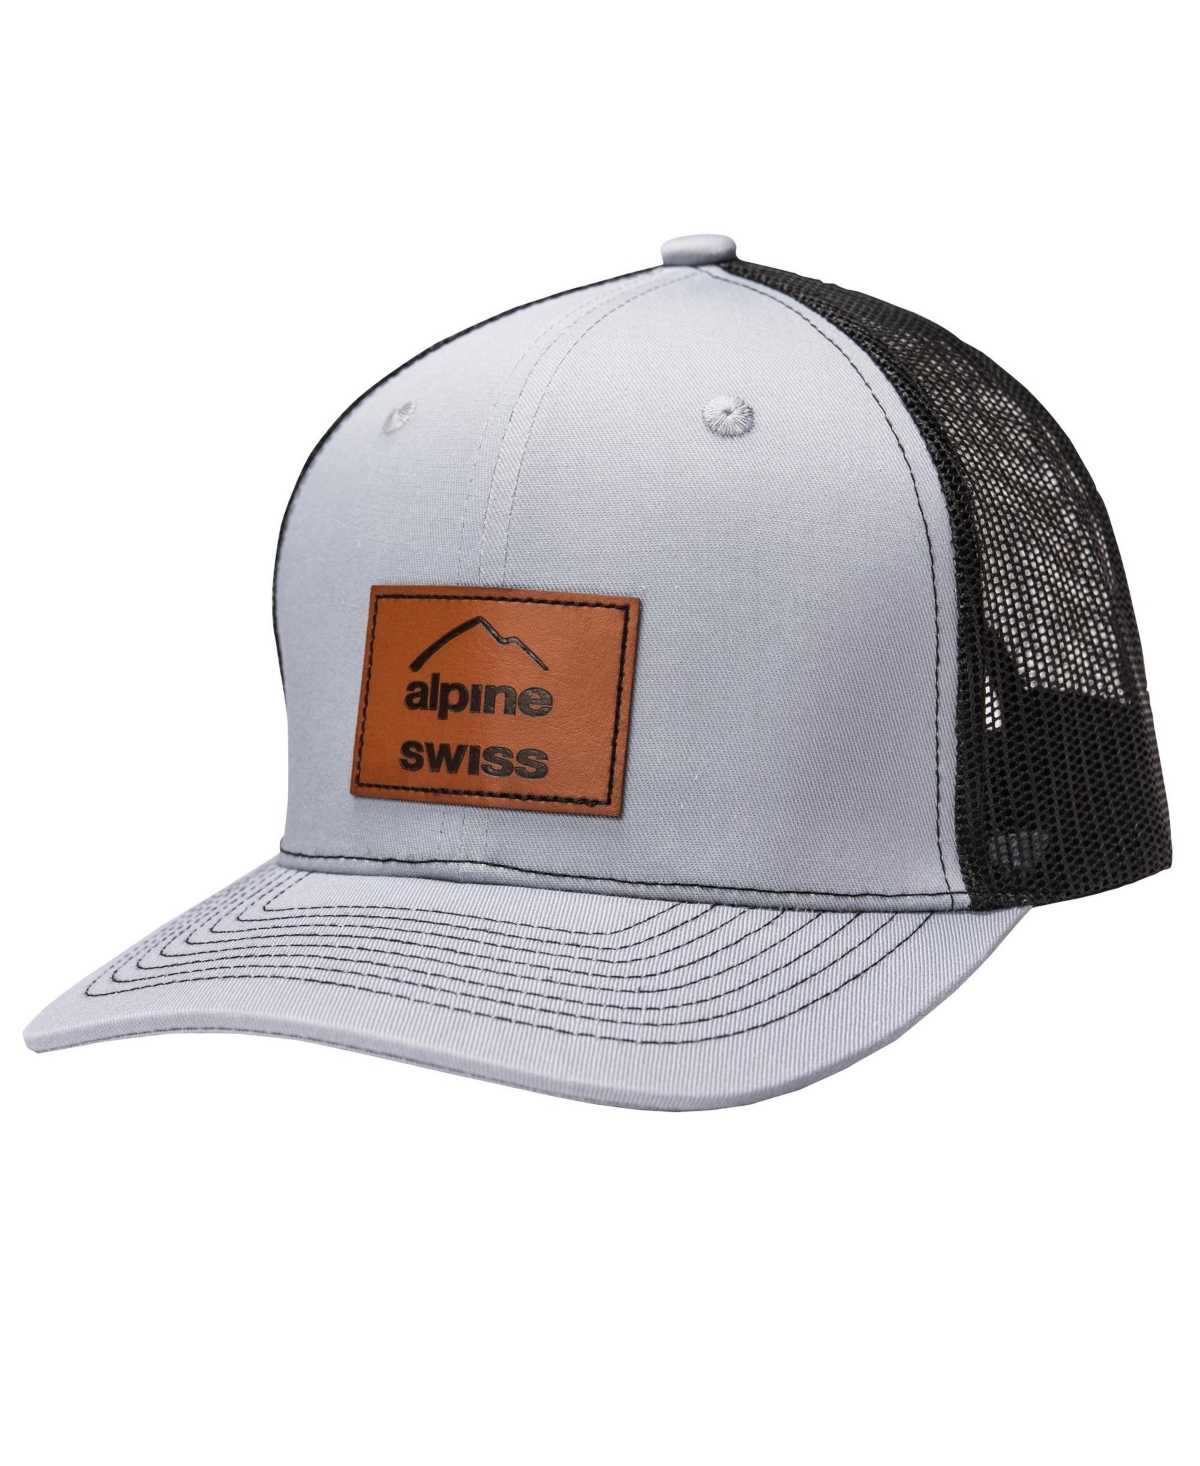 Men's Trucker Hat Snapback Mesh Back Cap Adjustable Baseball Cap - Gray